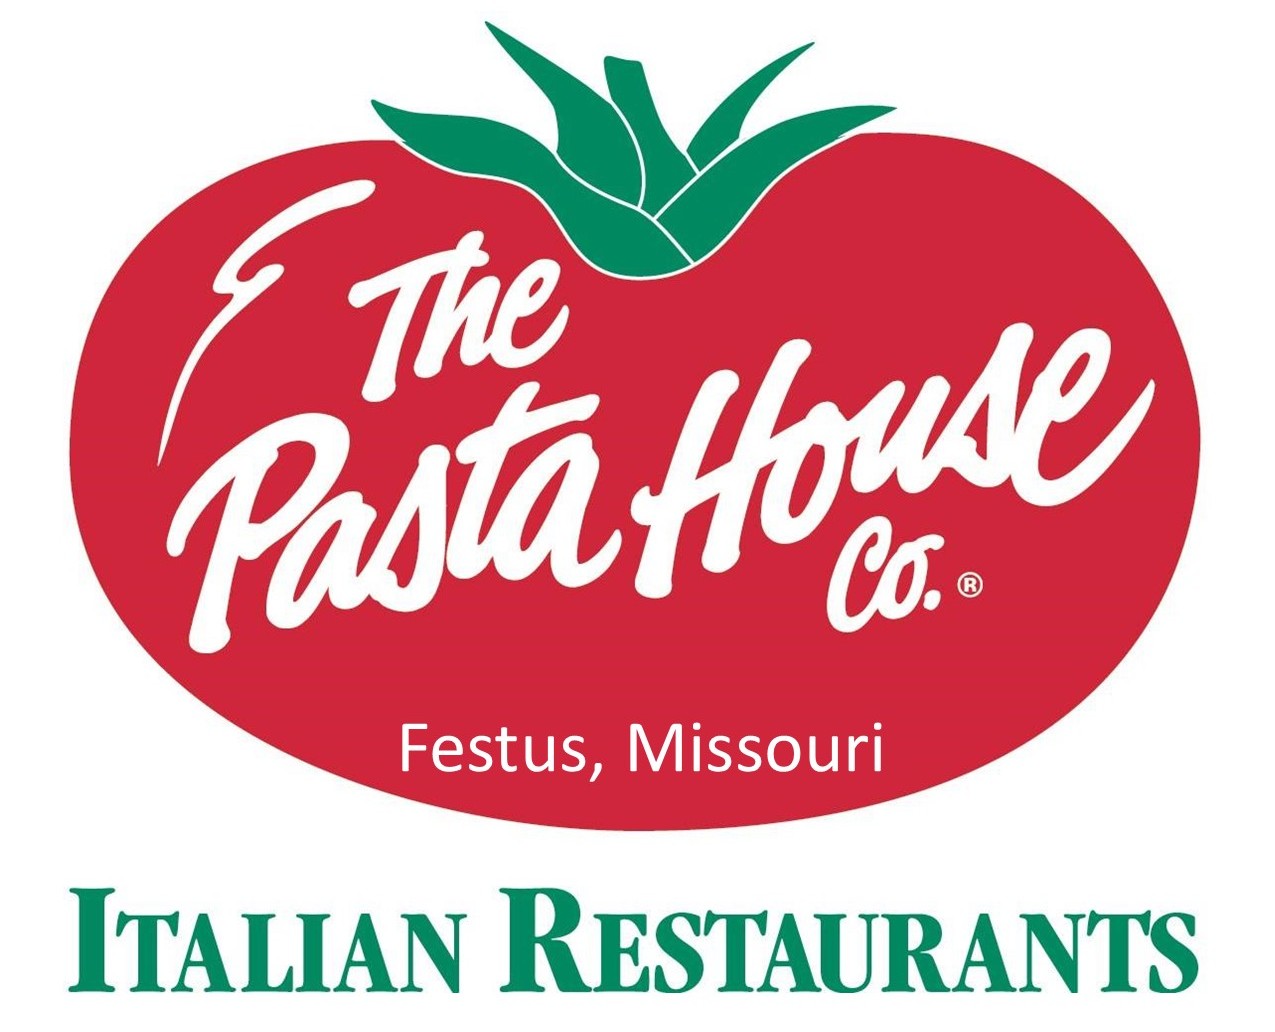 The Pasta House Festus